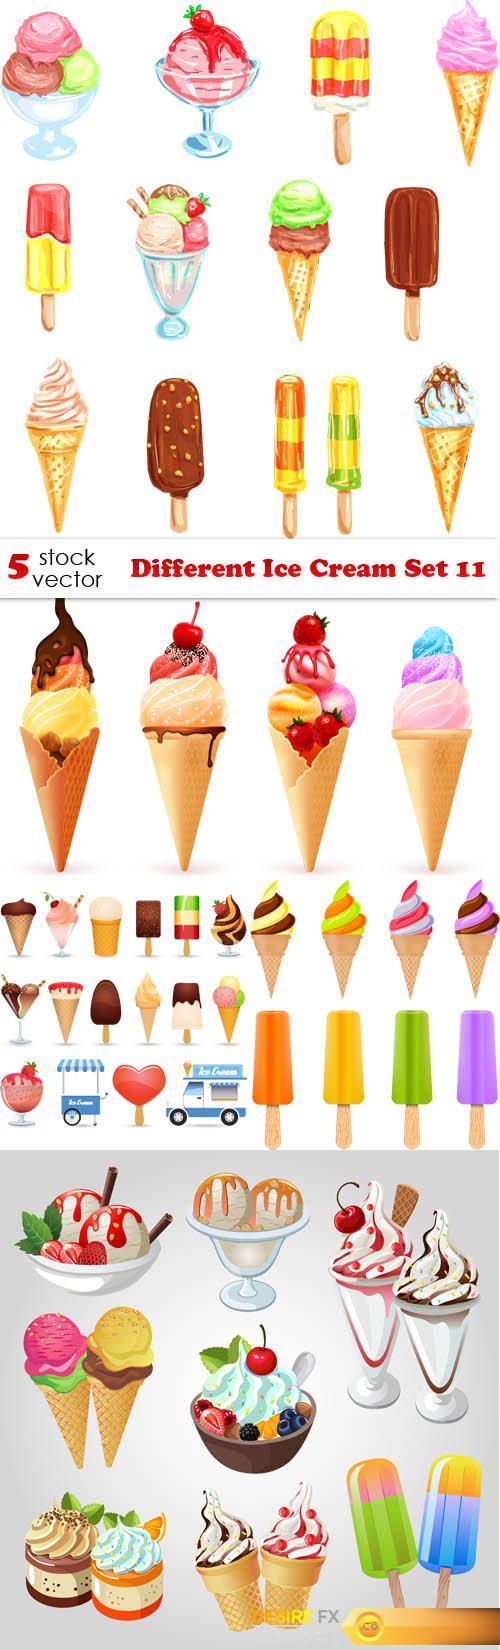 Vectors - Different Ice Cream Set 11